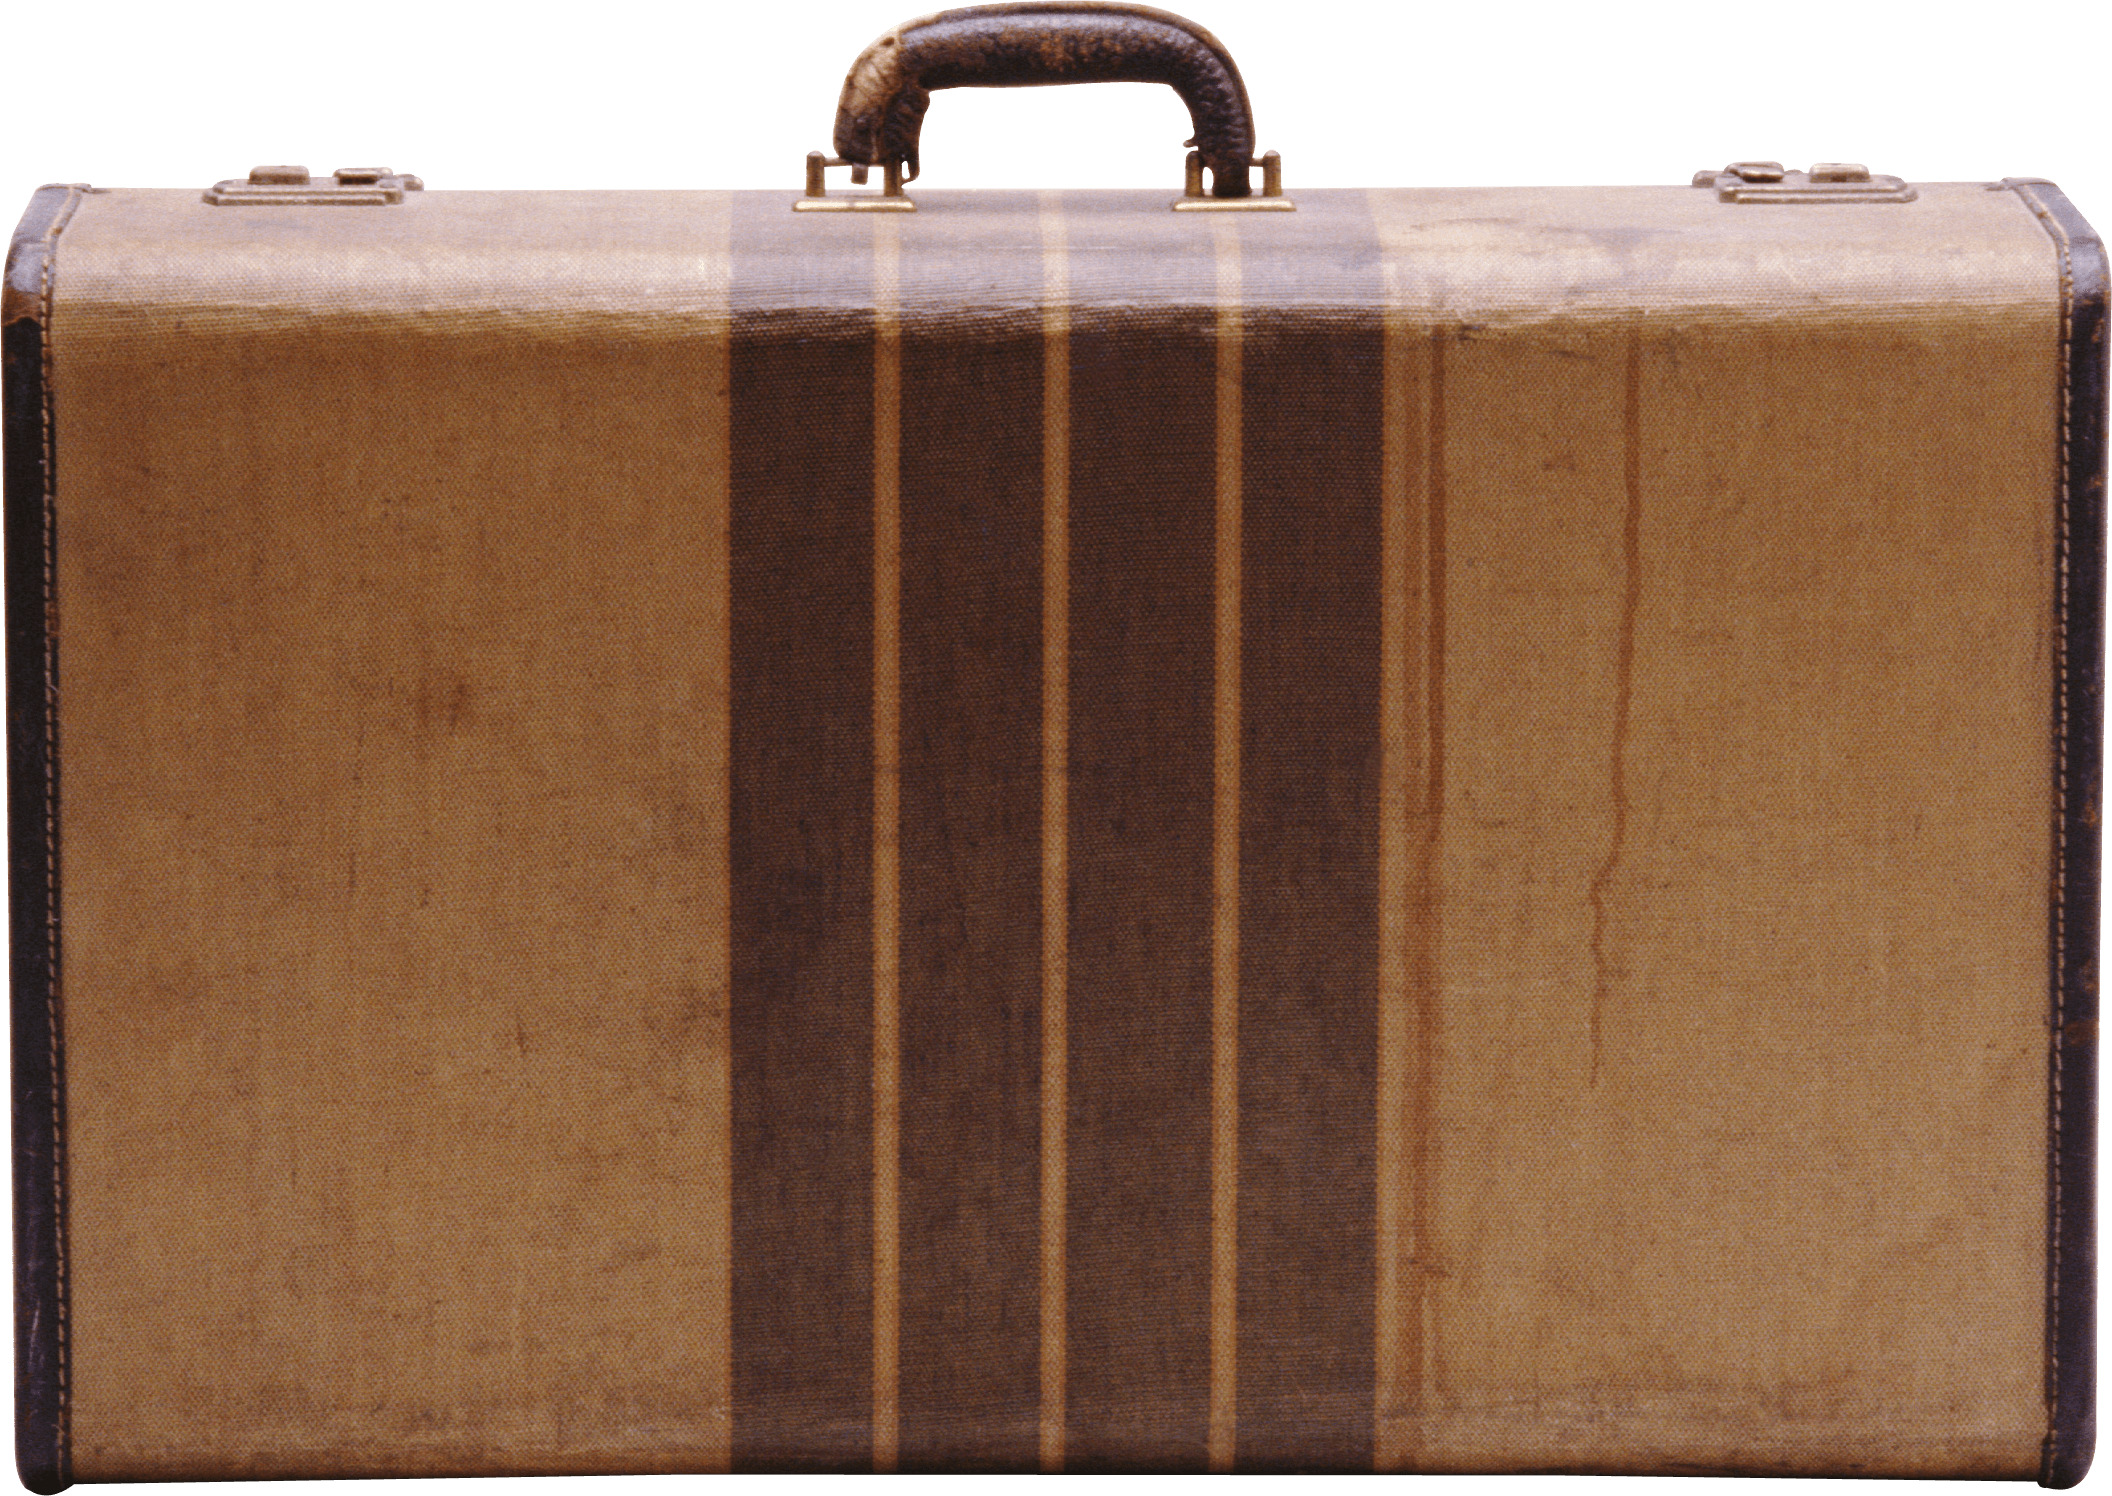 Vintage Cardboard Suitcase icons